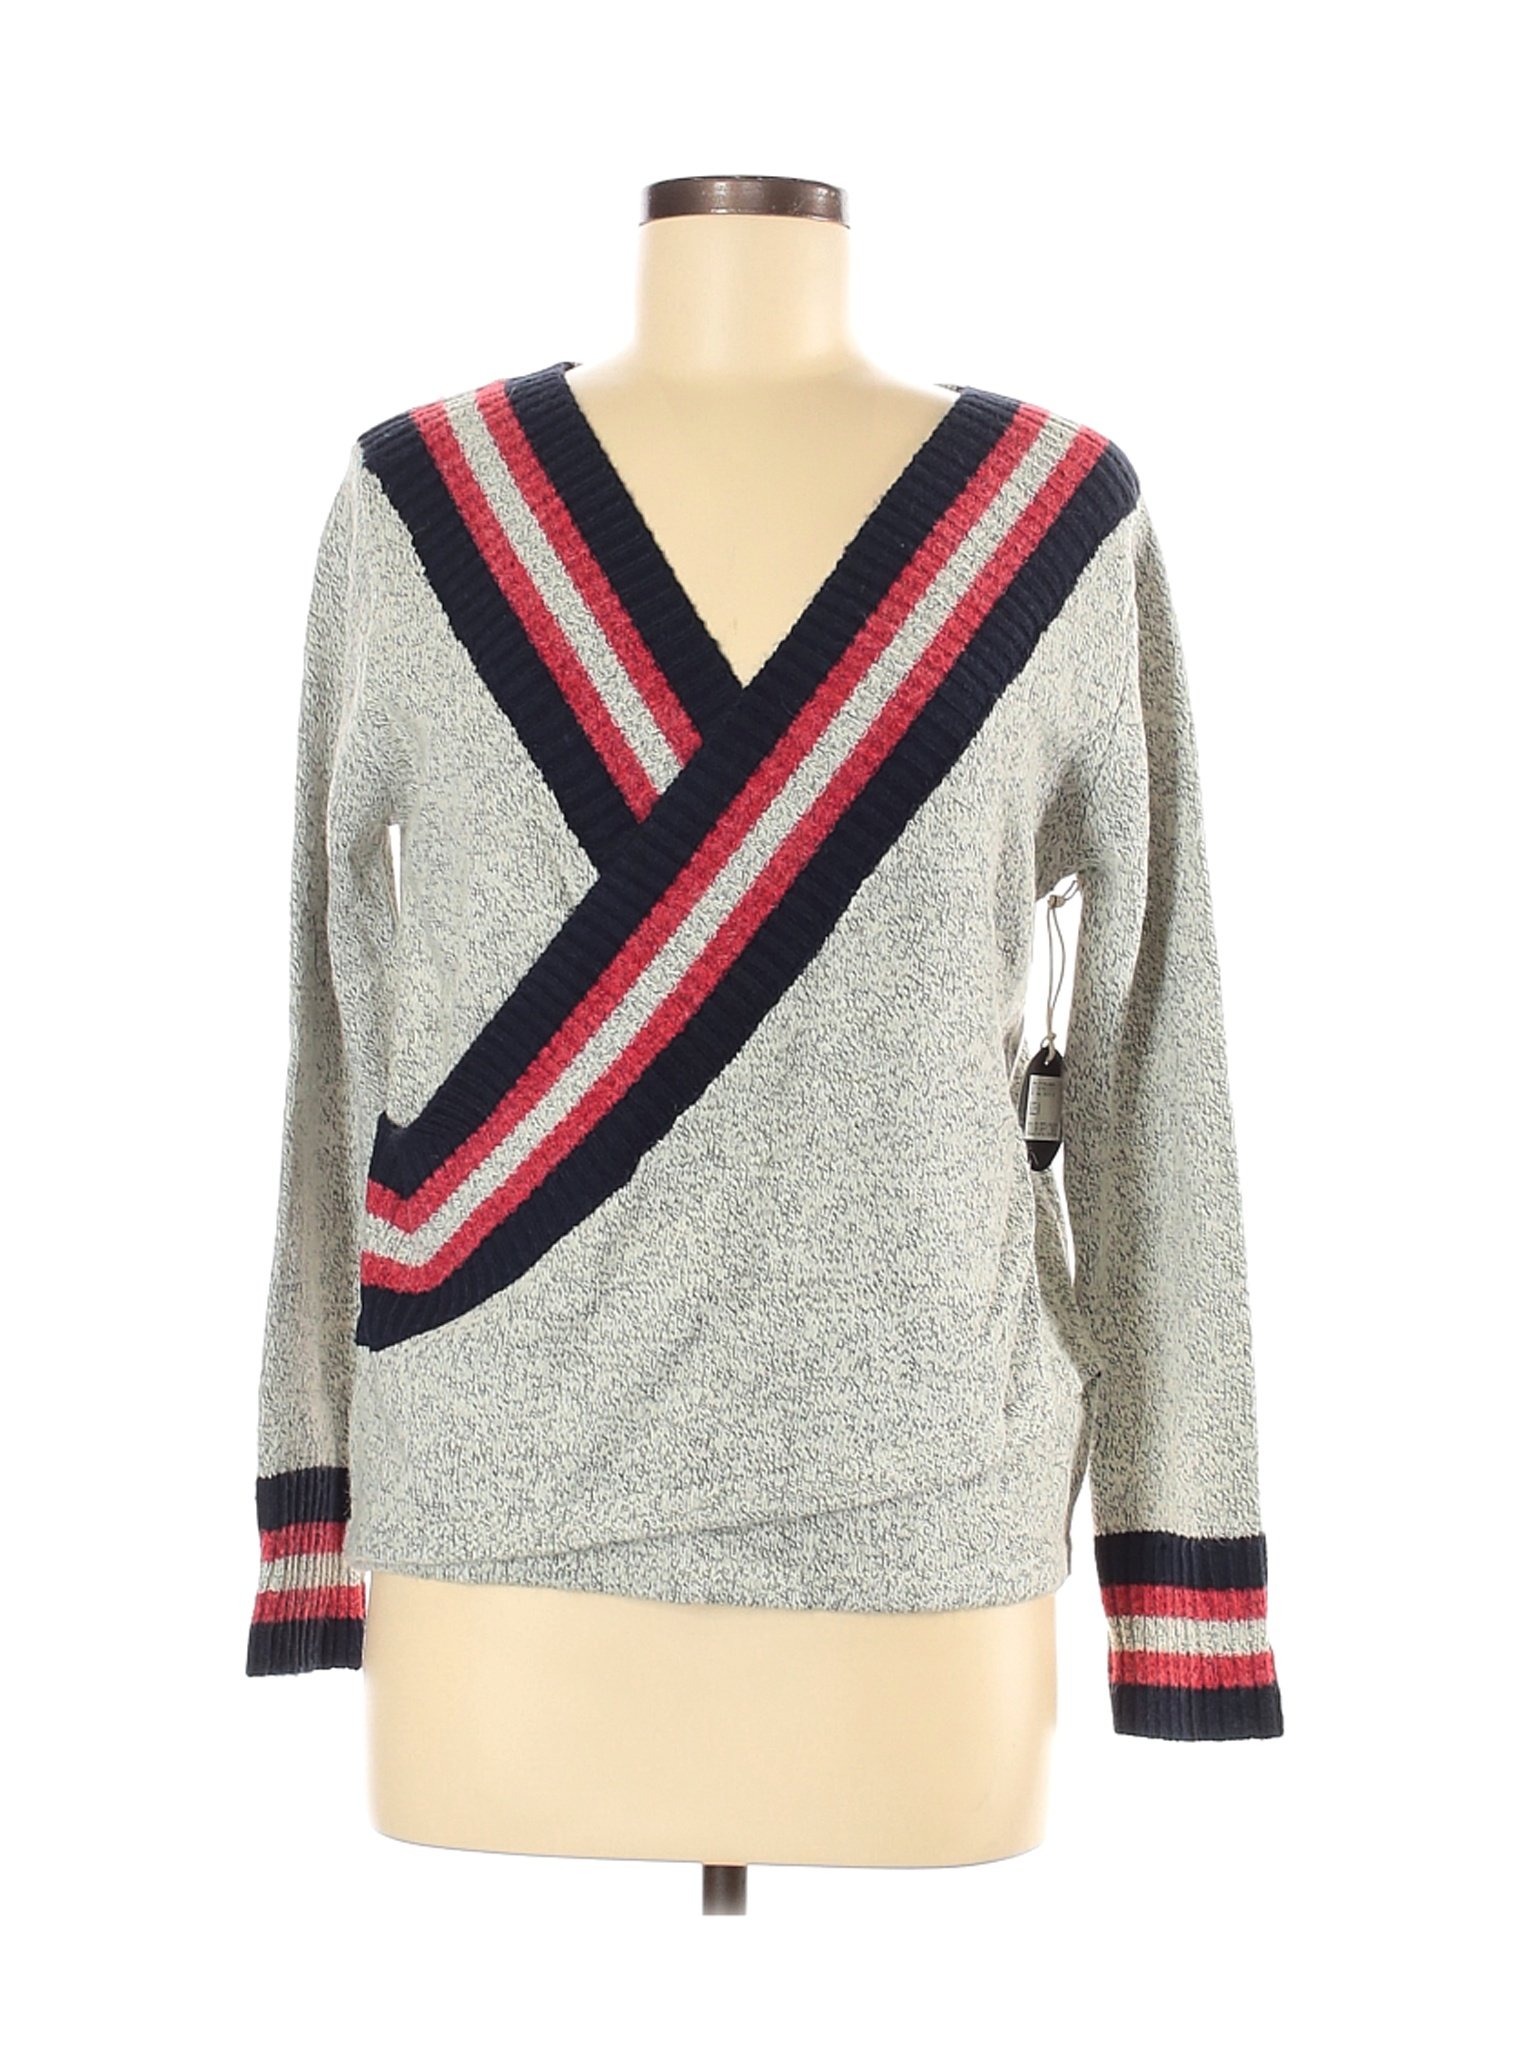 NWT Cocobleu Women Gray Pullover Sweater M | eBay